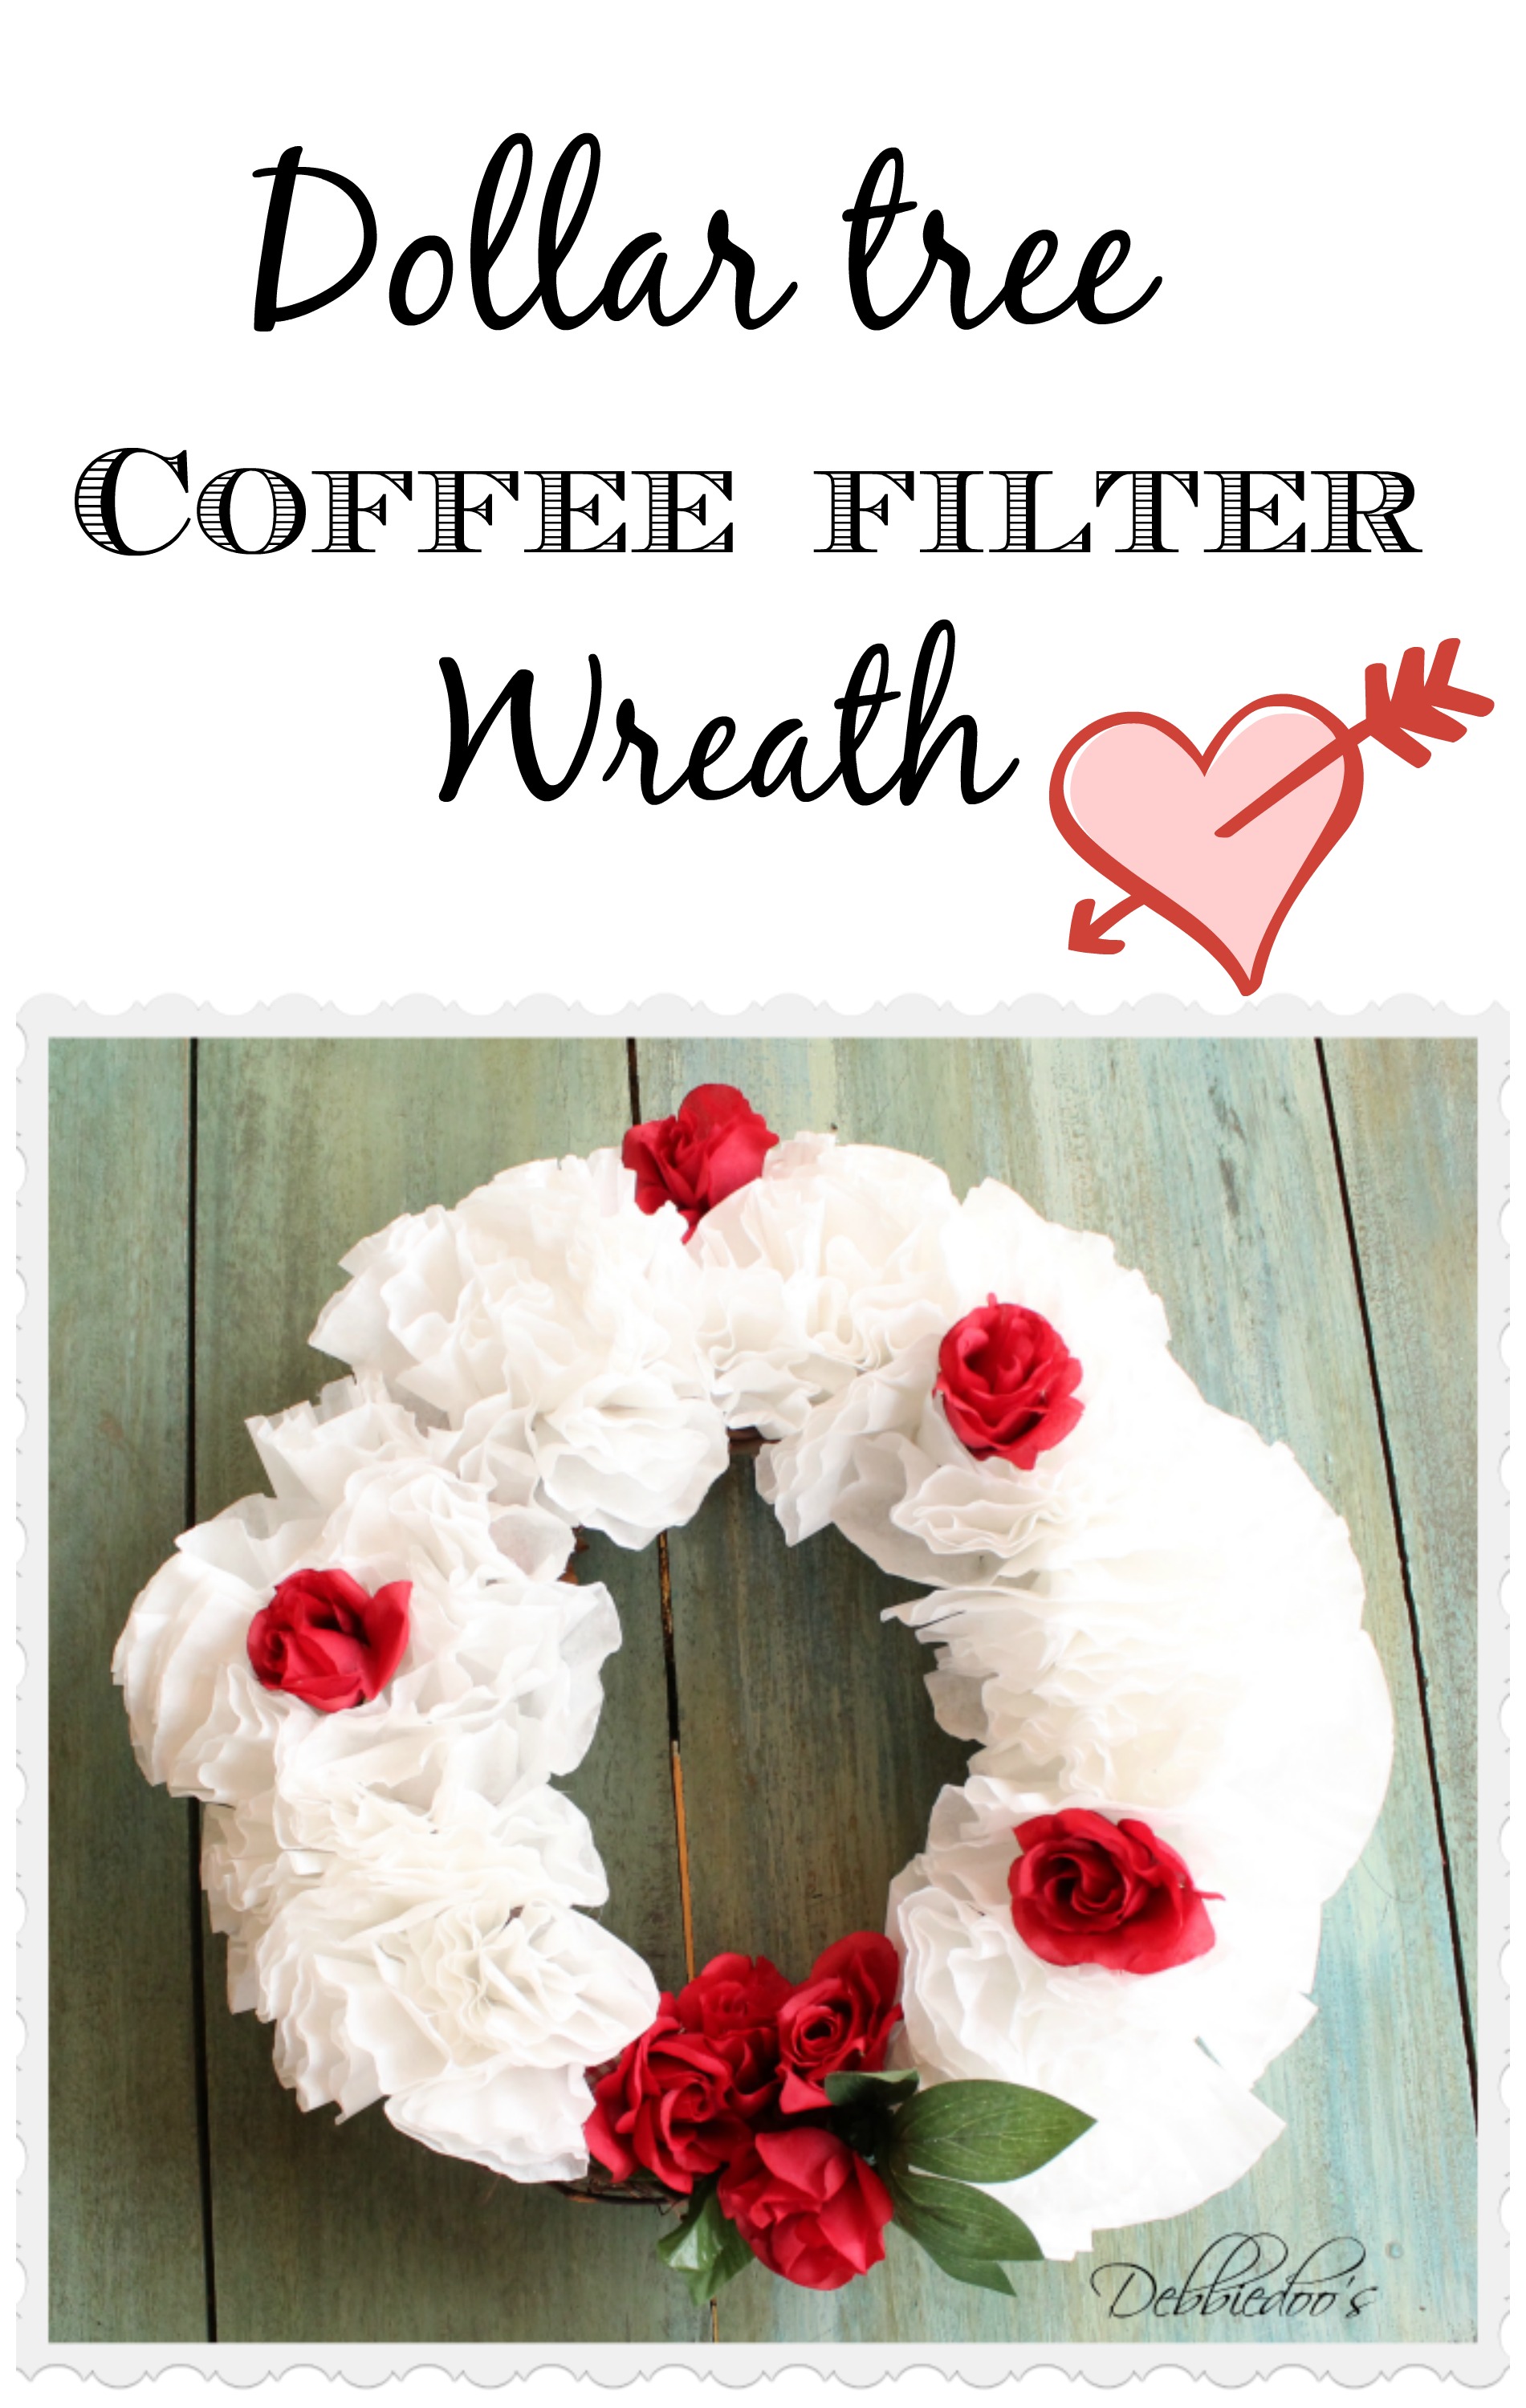 Dollar tree coffee filter wreath